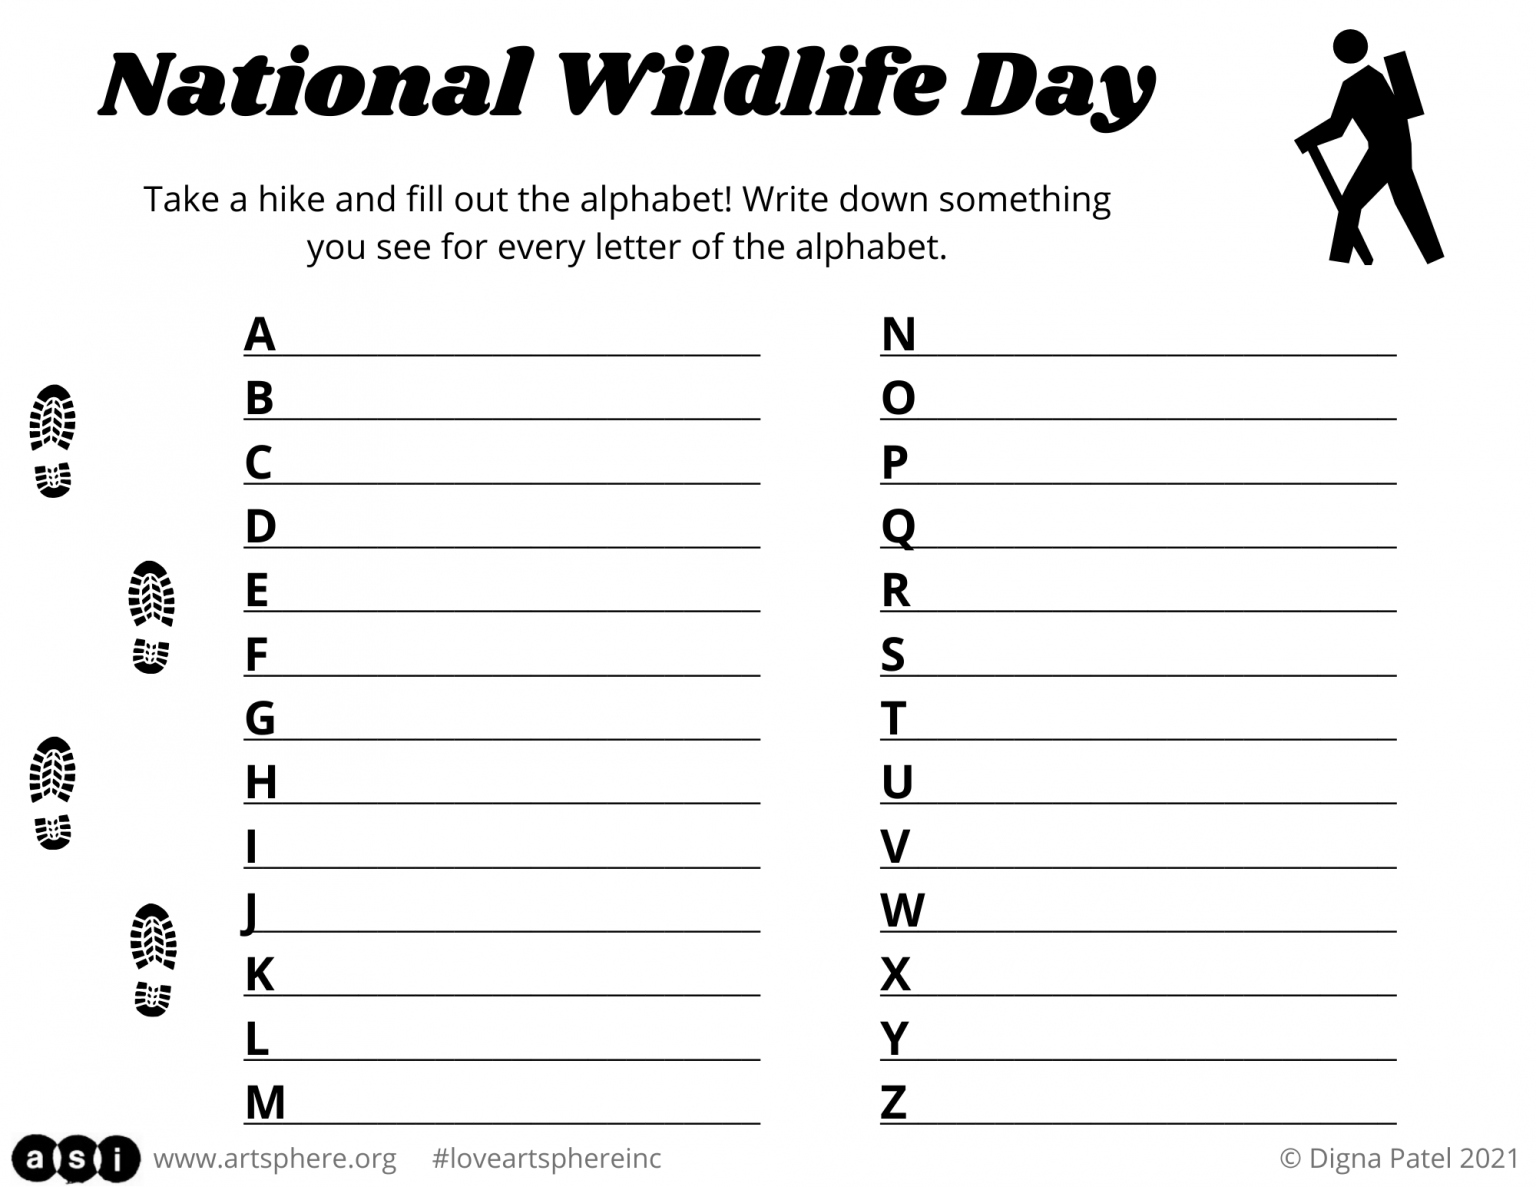 National Wildlife Day Art Sphere Inc.